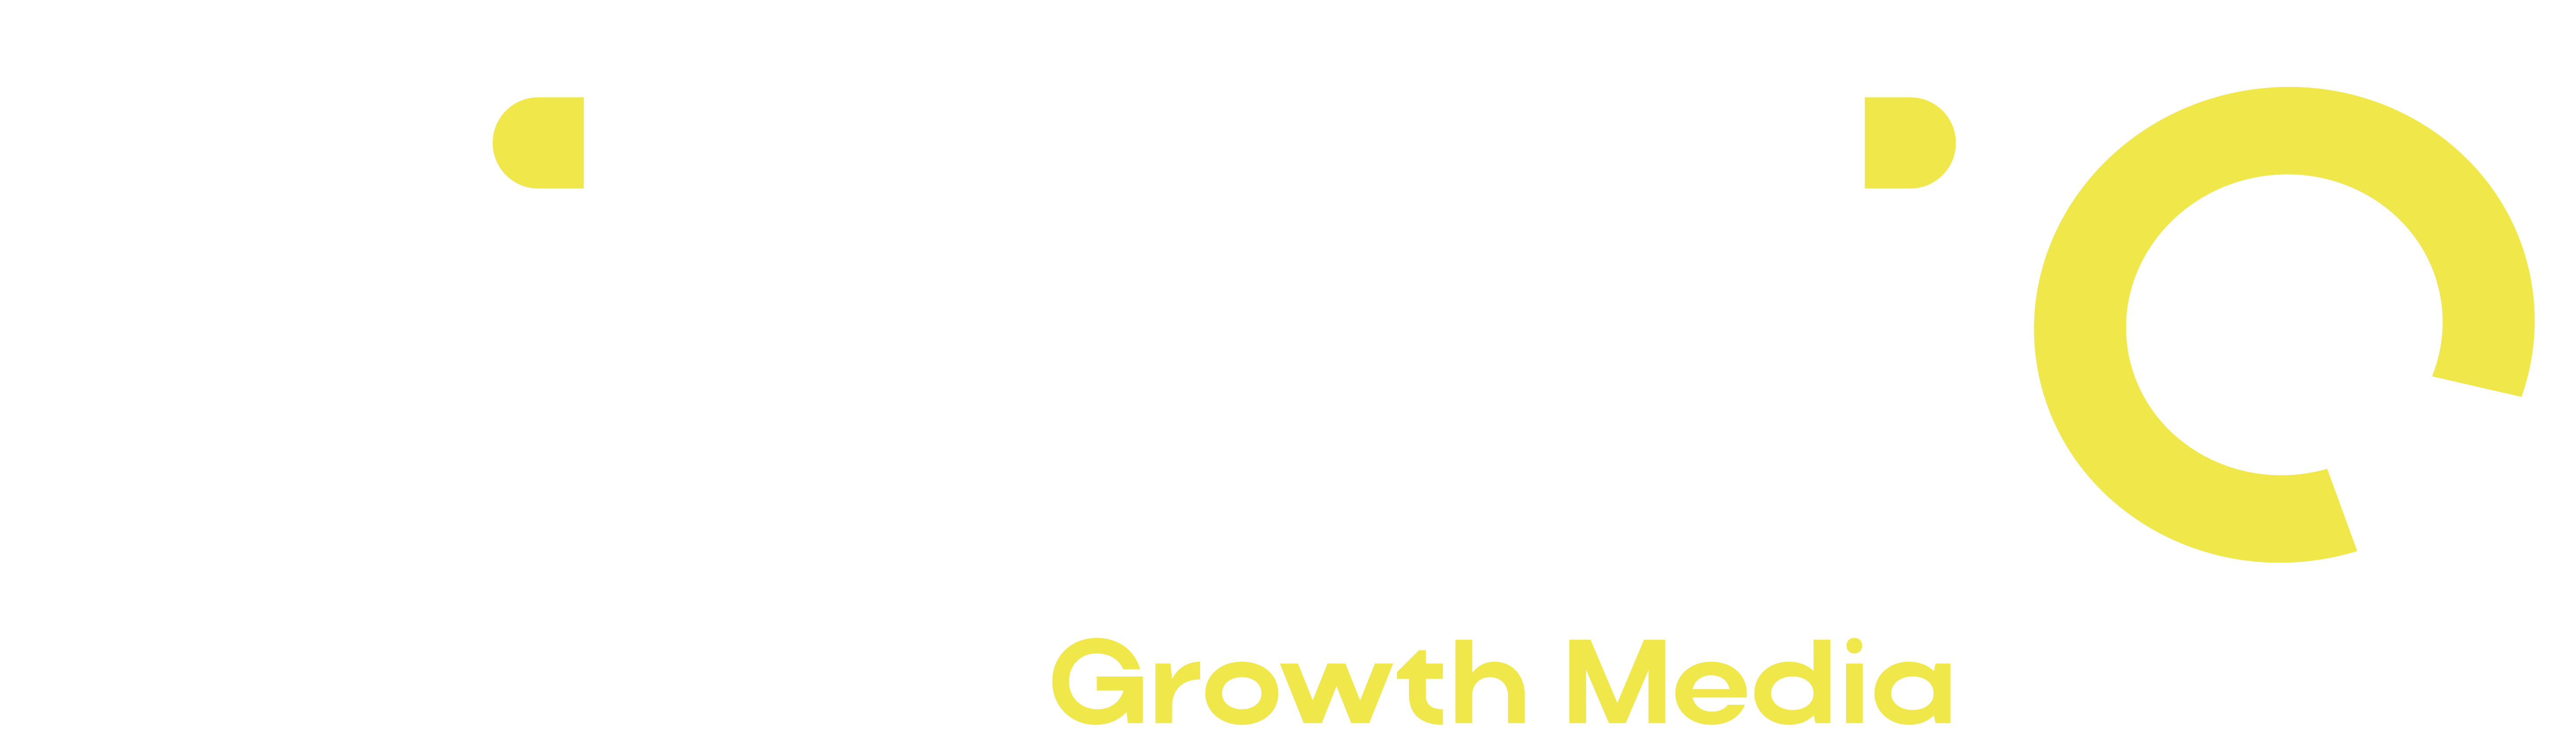 KinetiQ Growth